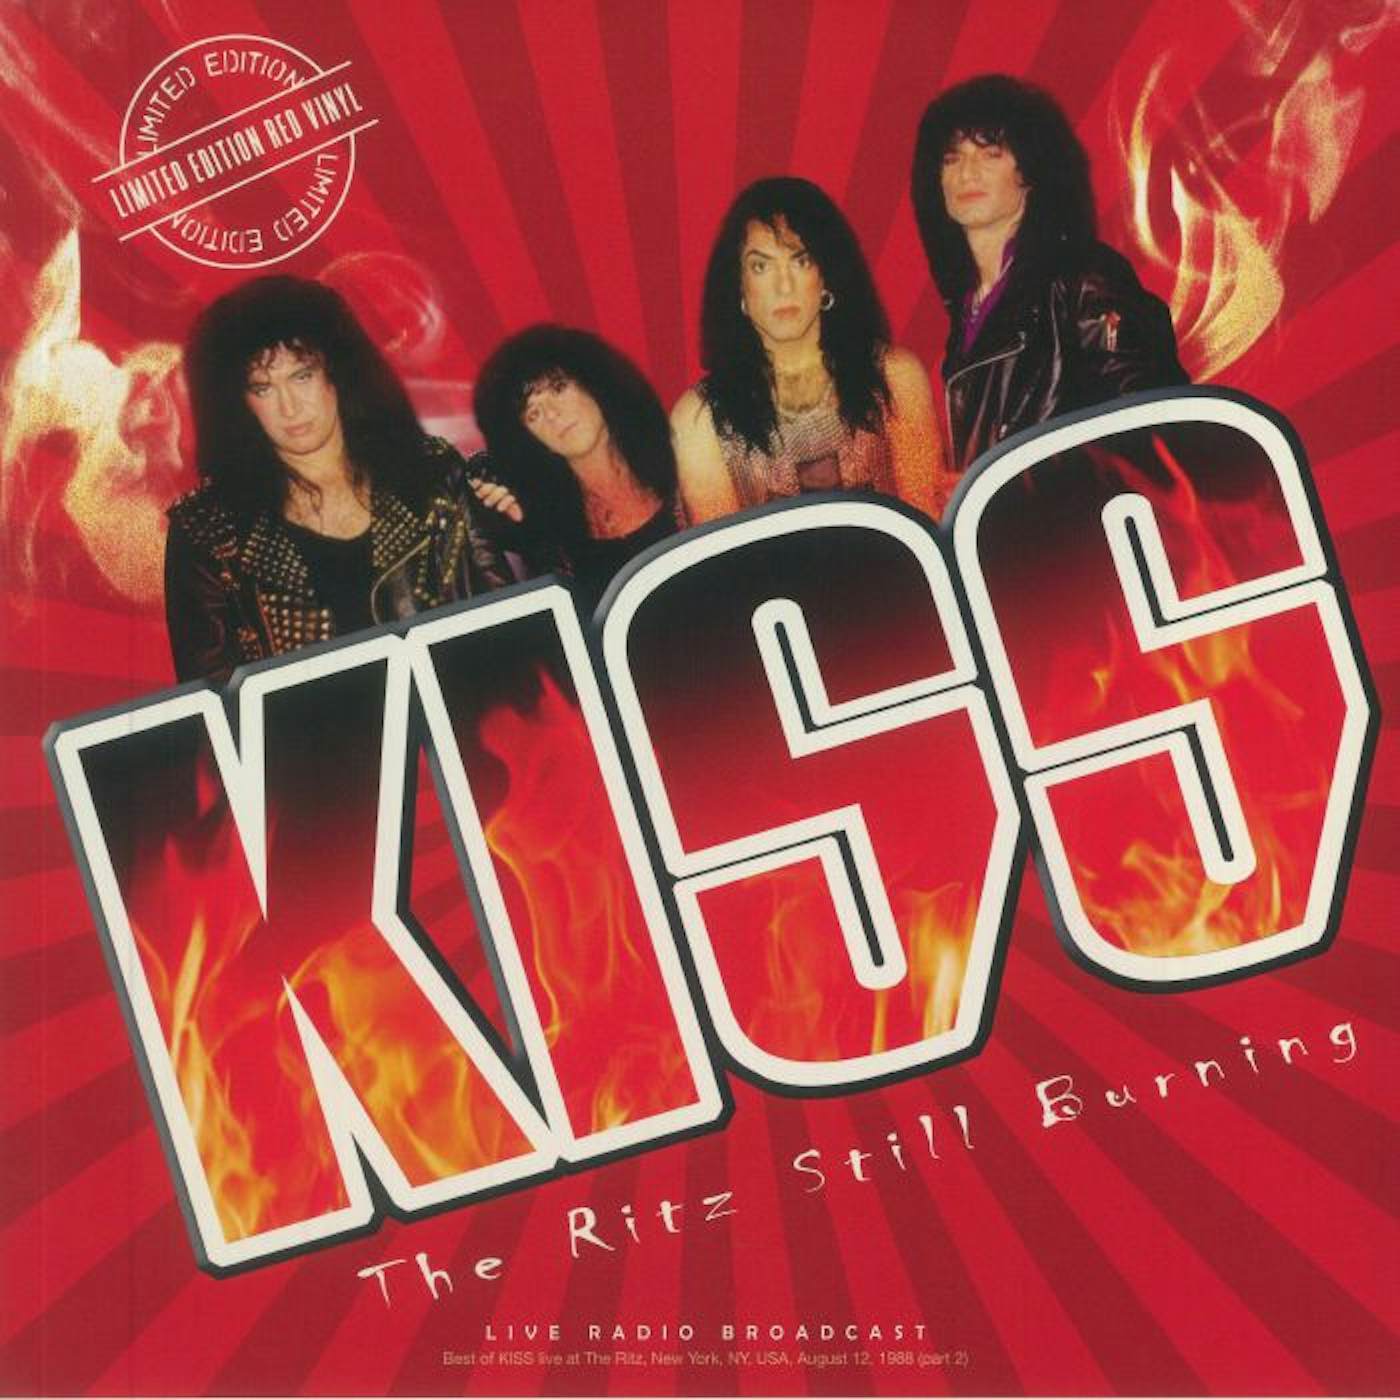 Kiss LP Vinyl Record - The Ritz Still Burning